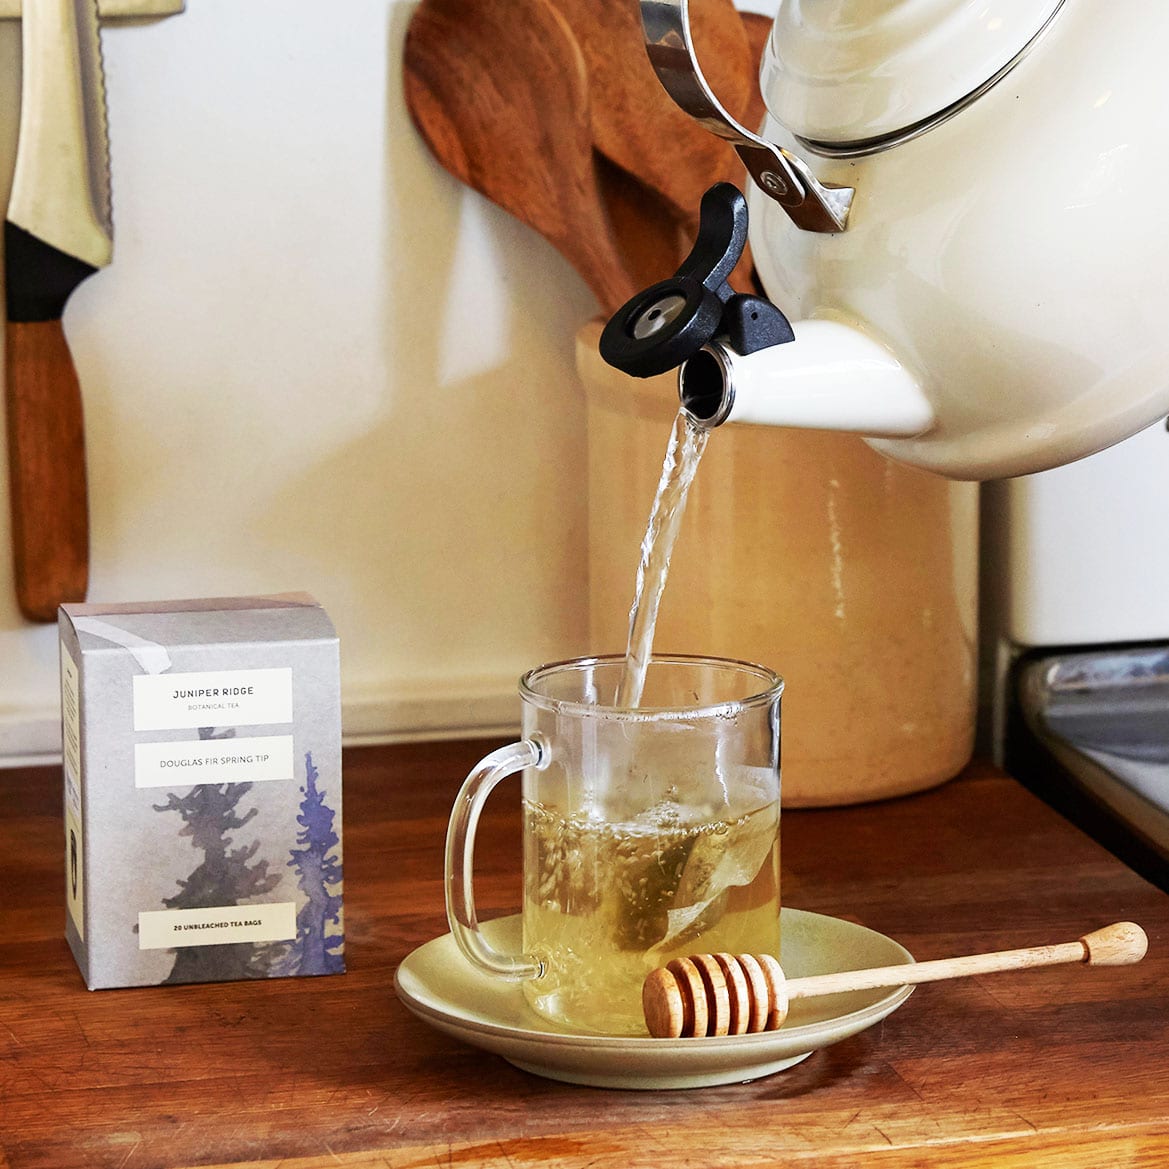 Douglas Fir & Spring Tip Botanical Tea